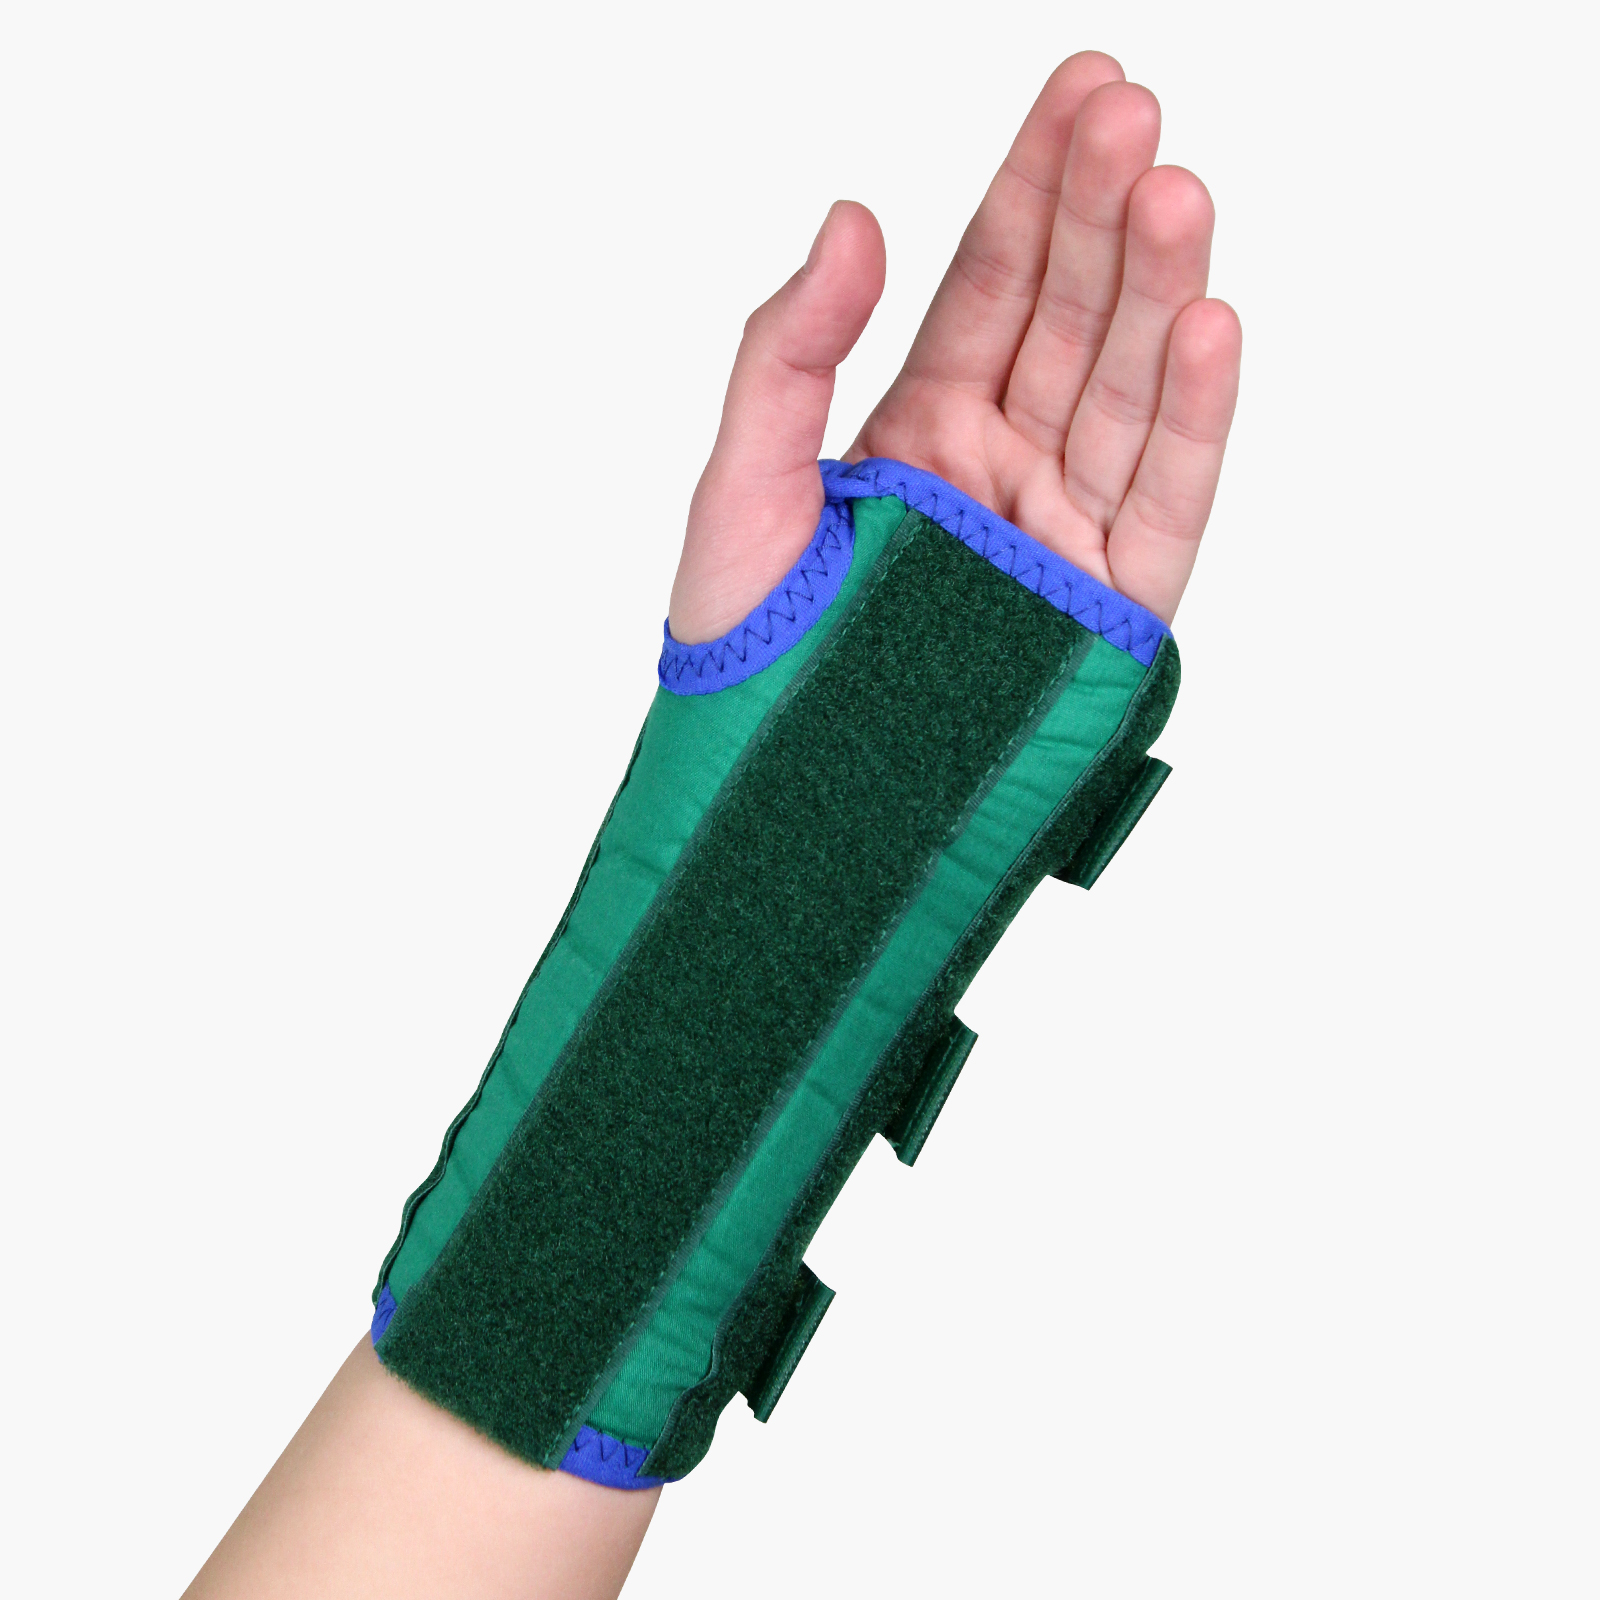 Premium Thumb and Wrist Splint by DeRoyal